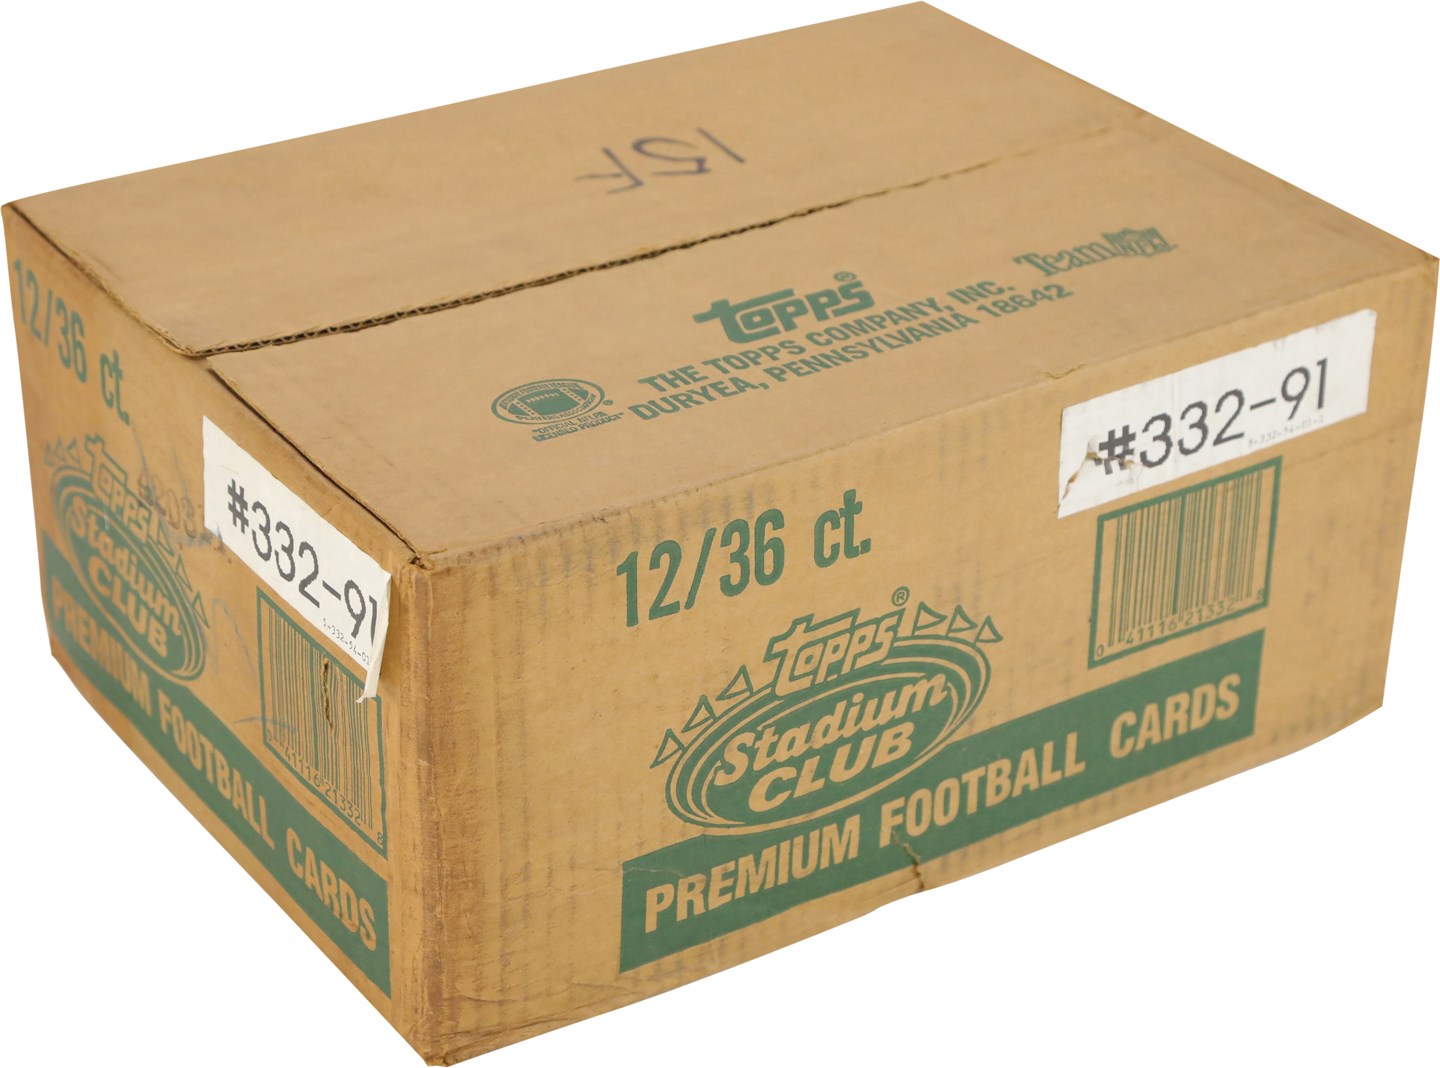 - 1991 Topps Stadium Club Football Sealed Wax Case (1)